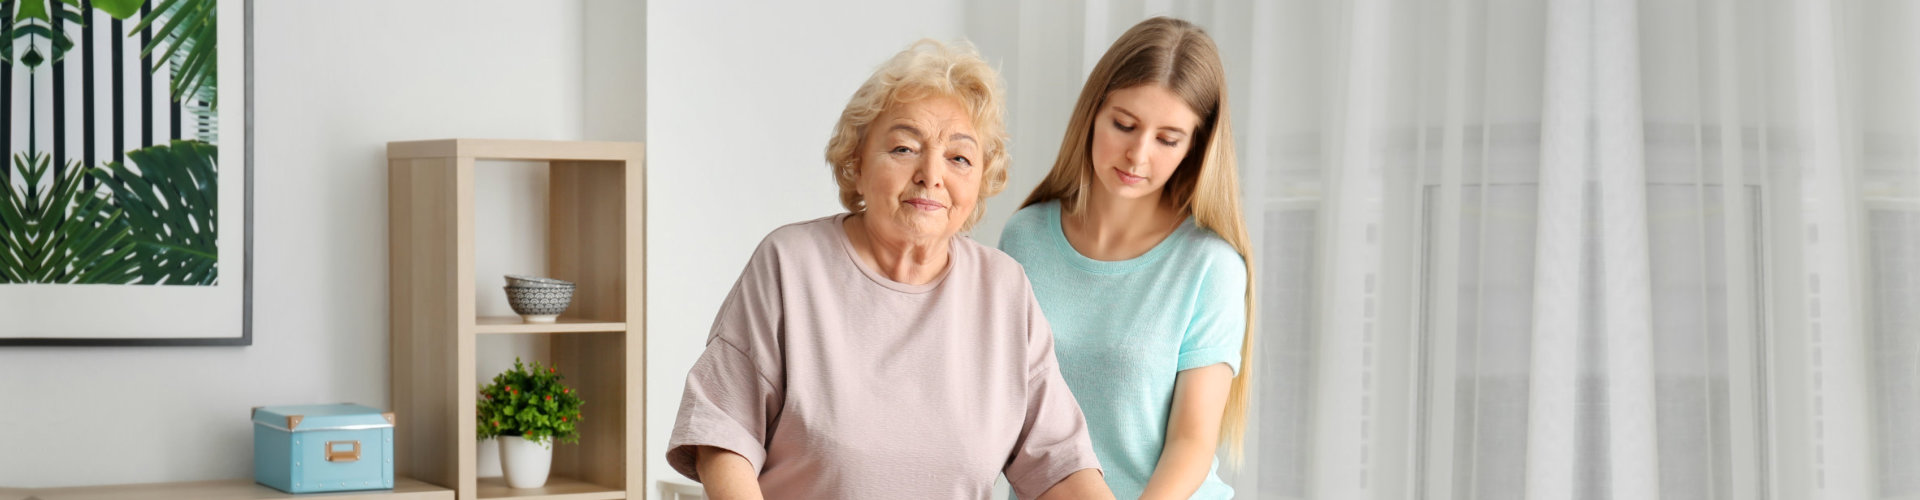 caregiver helping a senior woman